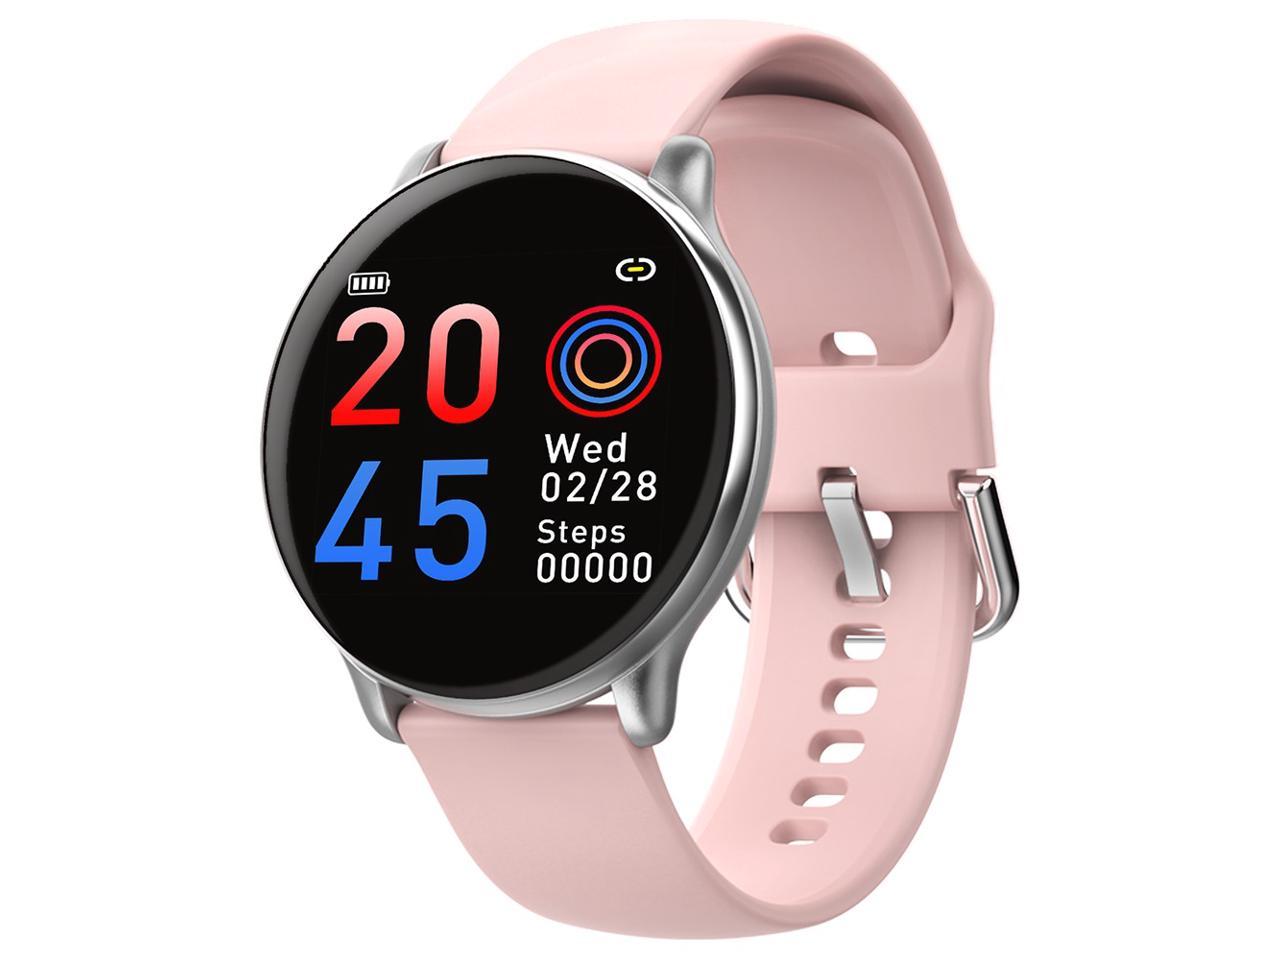 Model -SE01 Smart Watch 1.3 Inch IPS Screen Heart Rate Blood Pressure Monitor IP68 - Pink